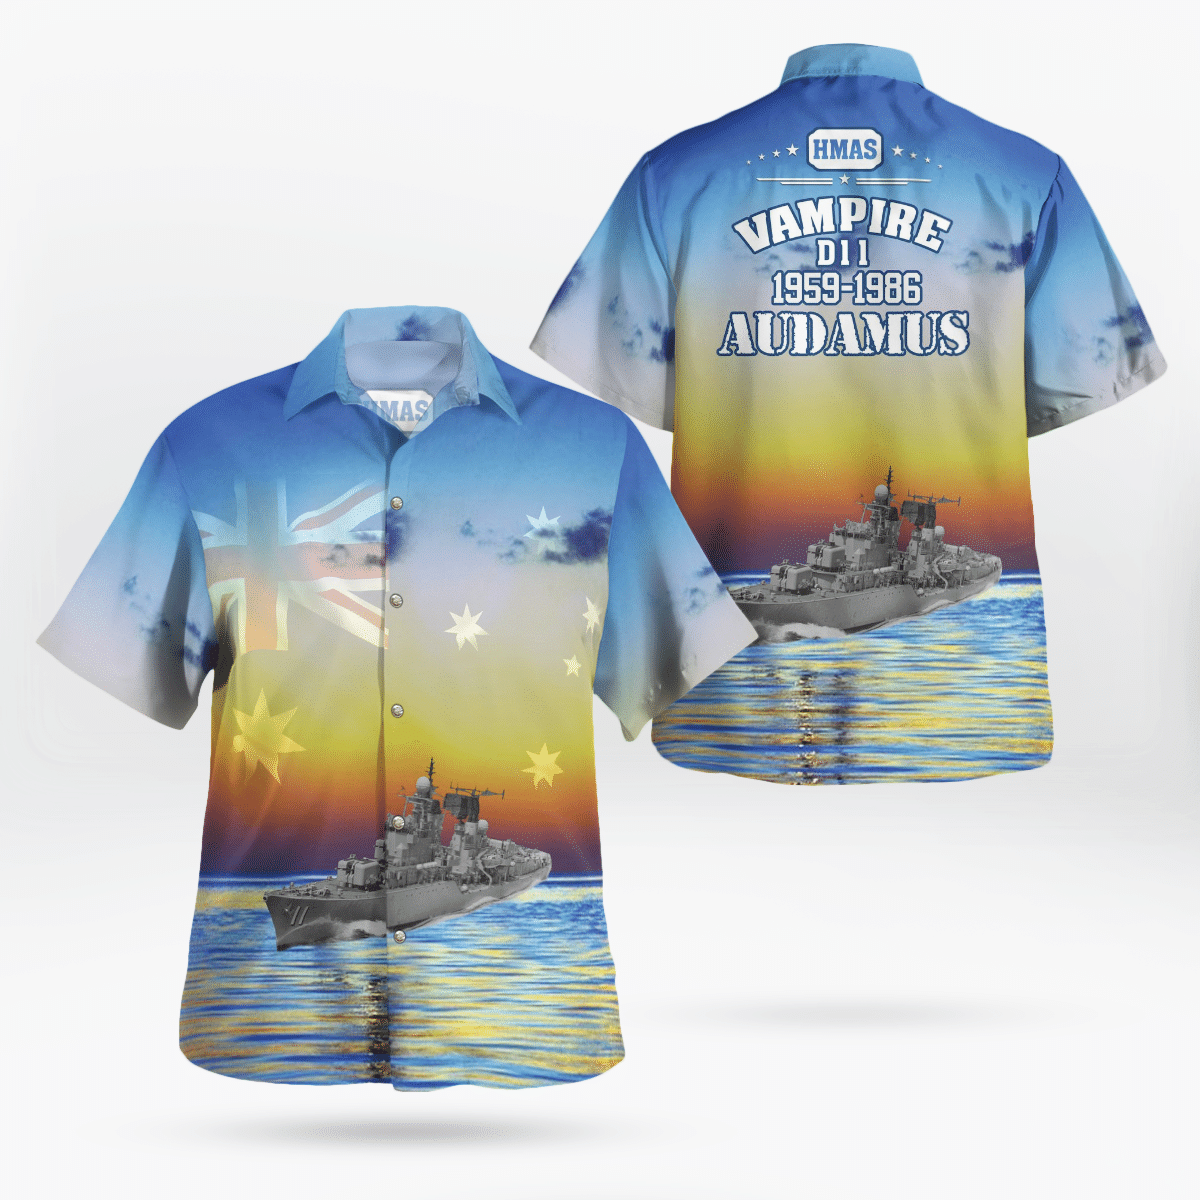 Get a new Hawaiian shirt to enjoy summer vacation 264